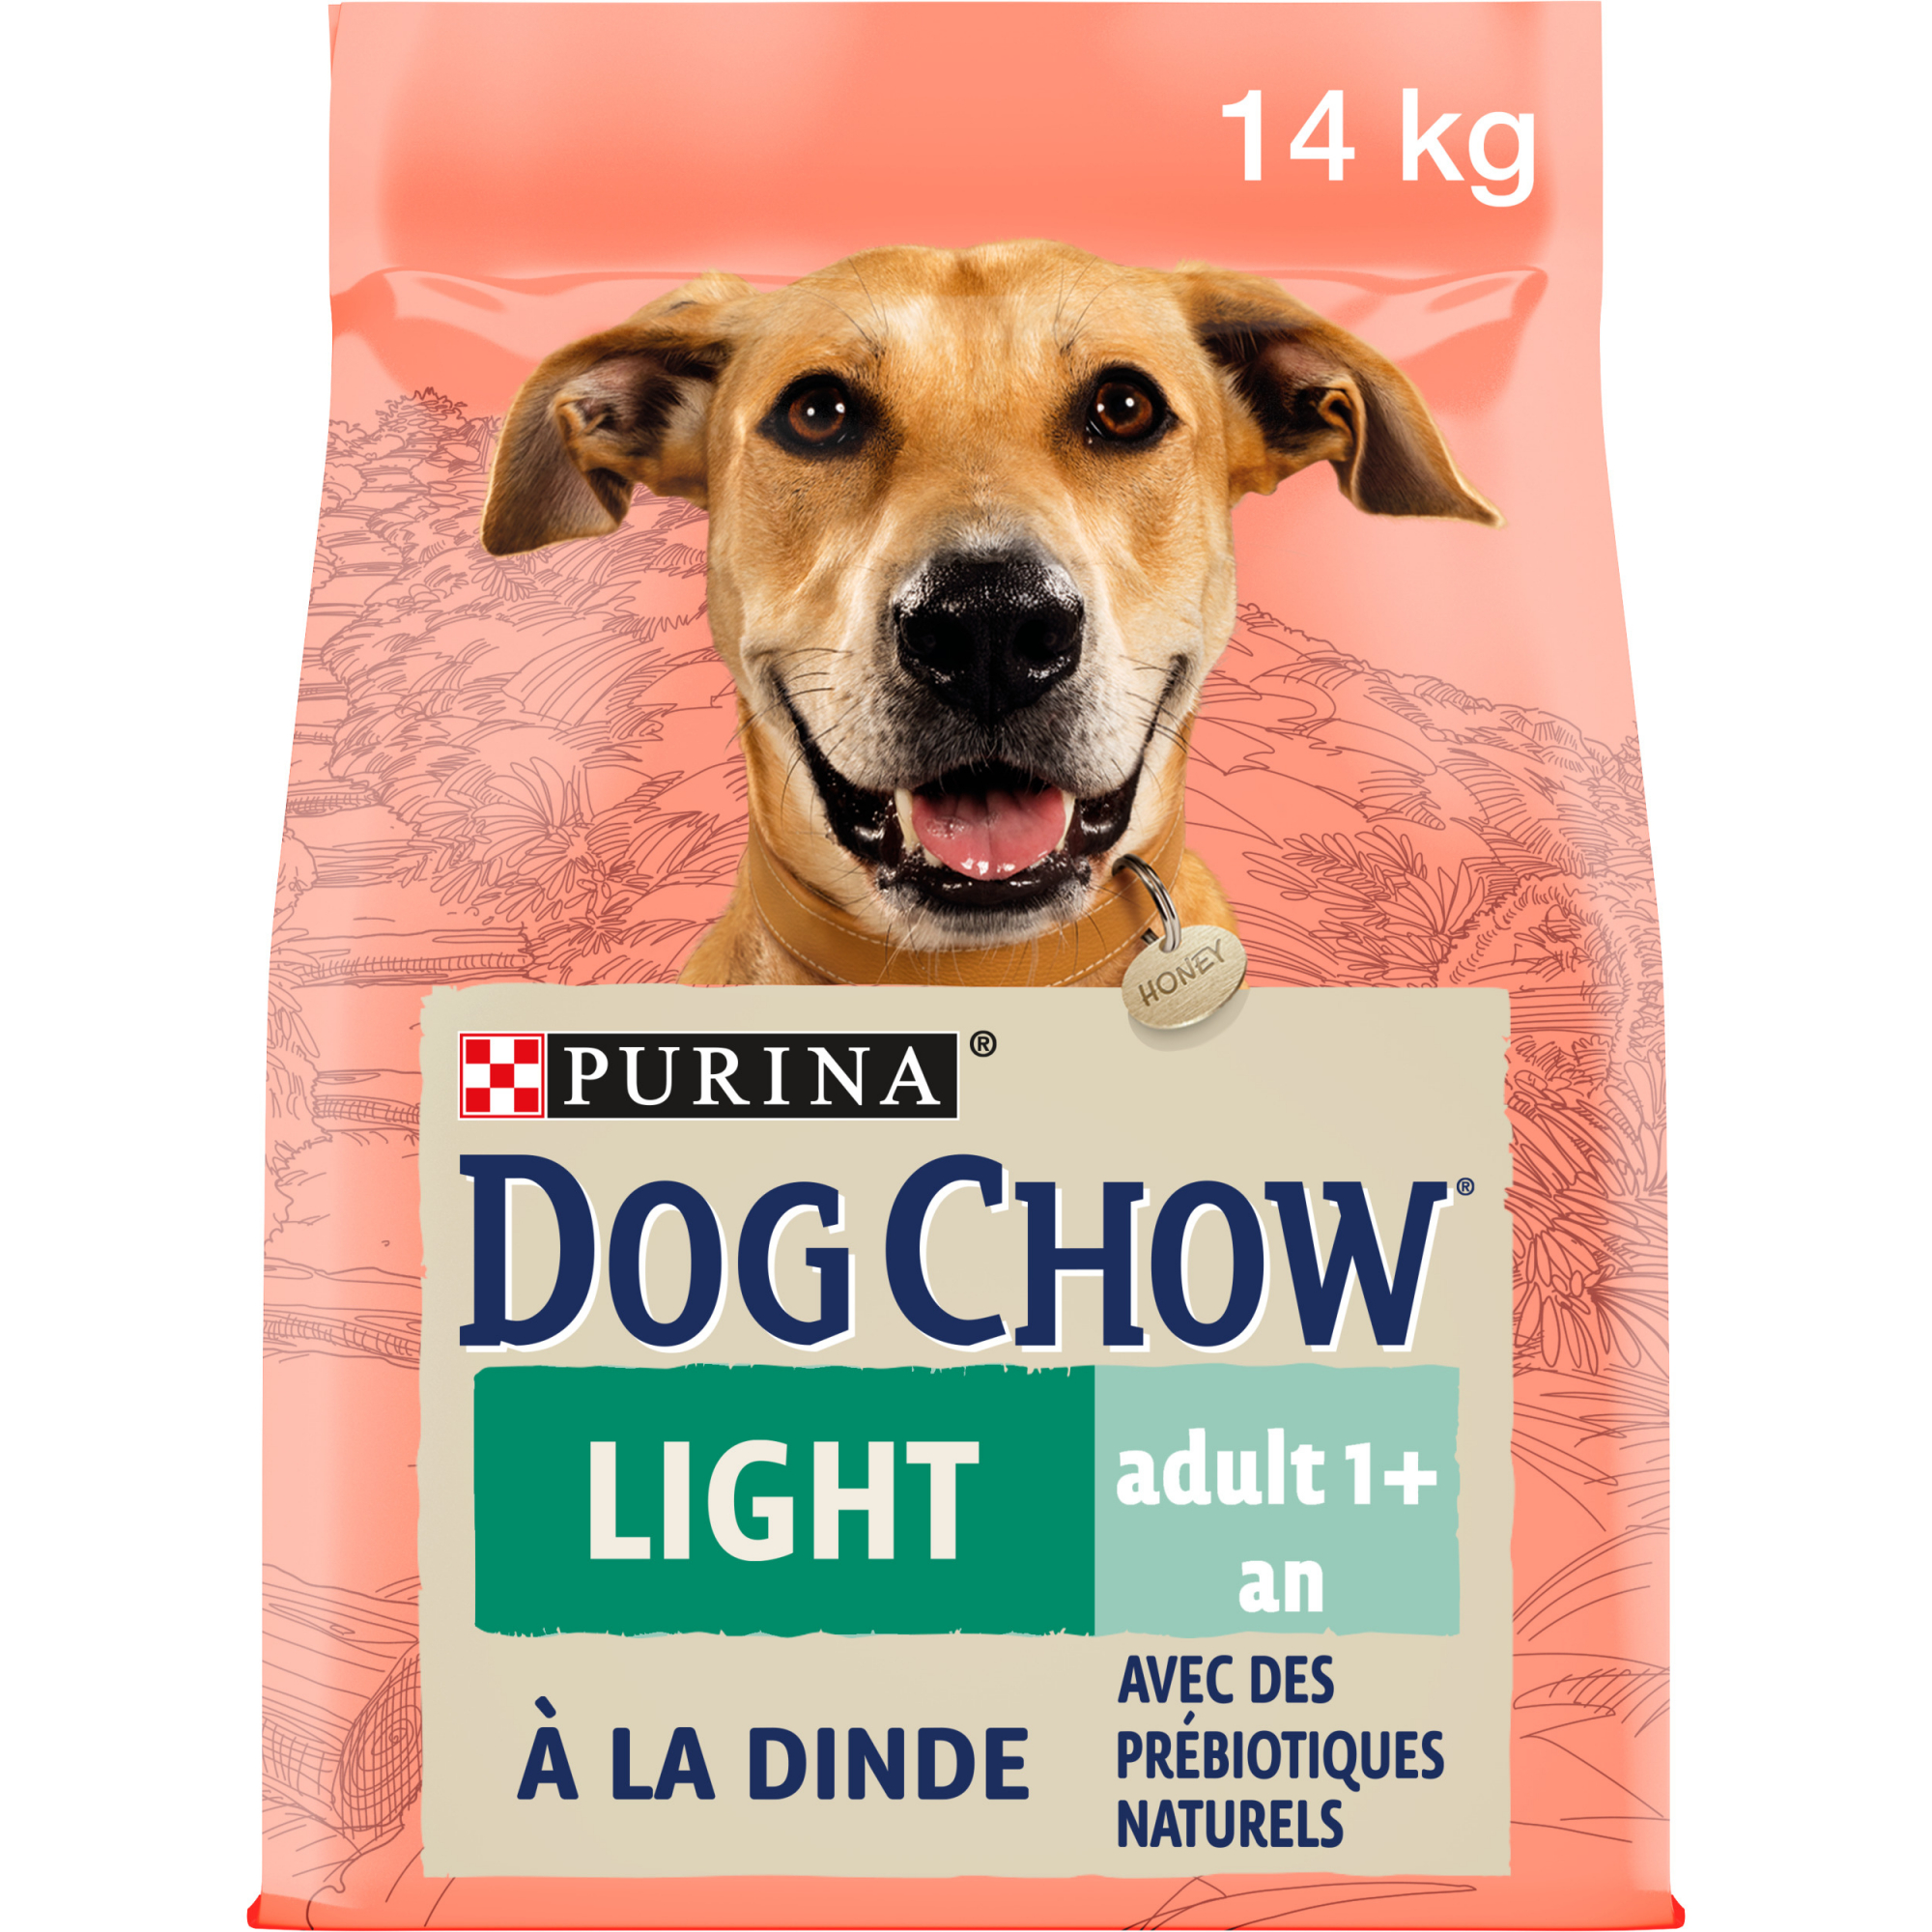 DOG CHOW Light mit Pute